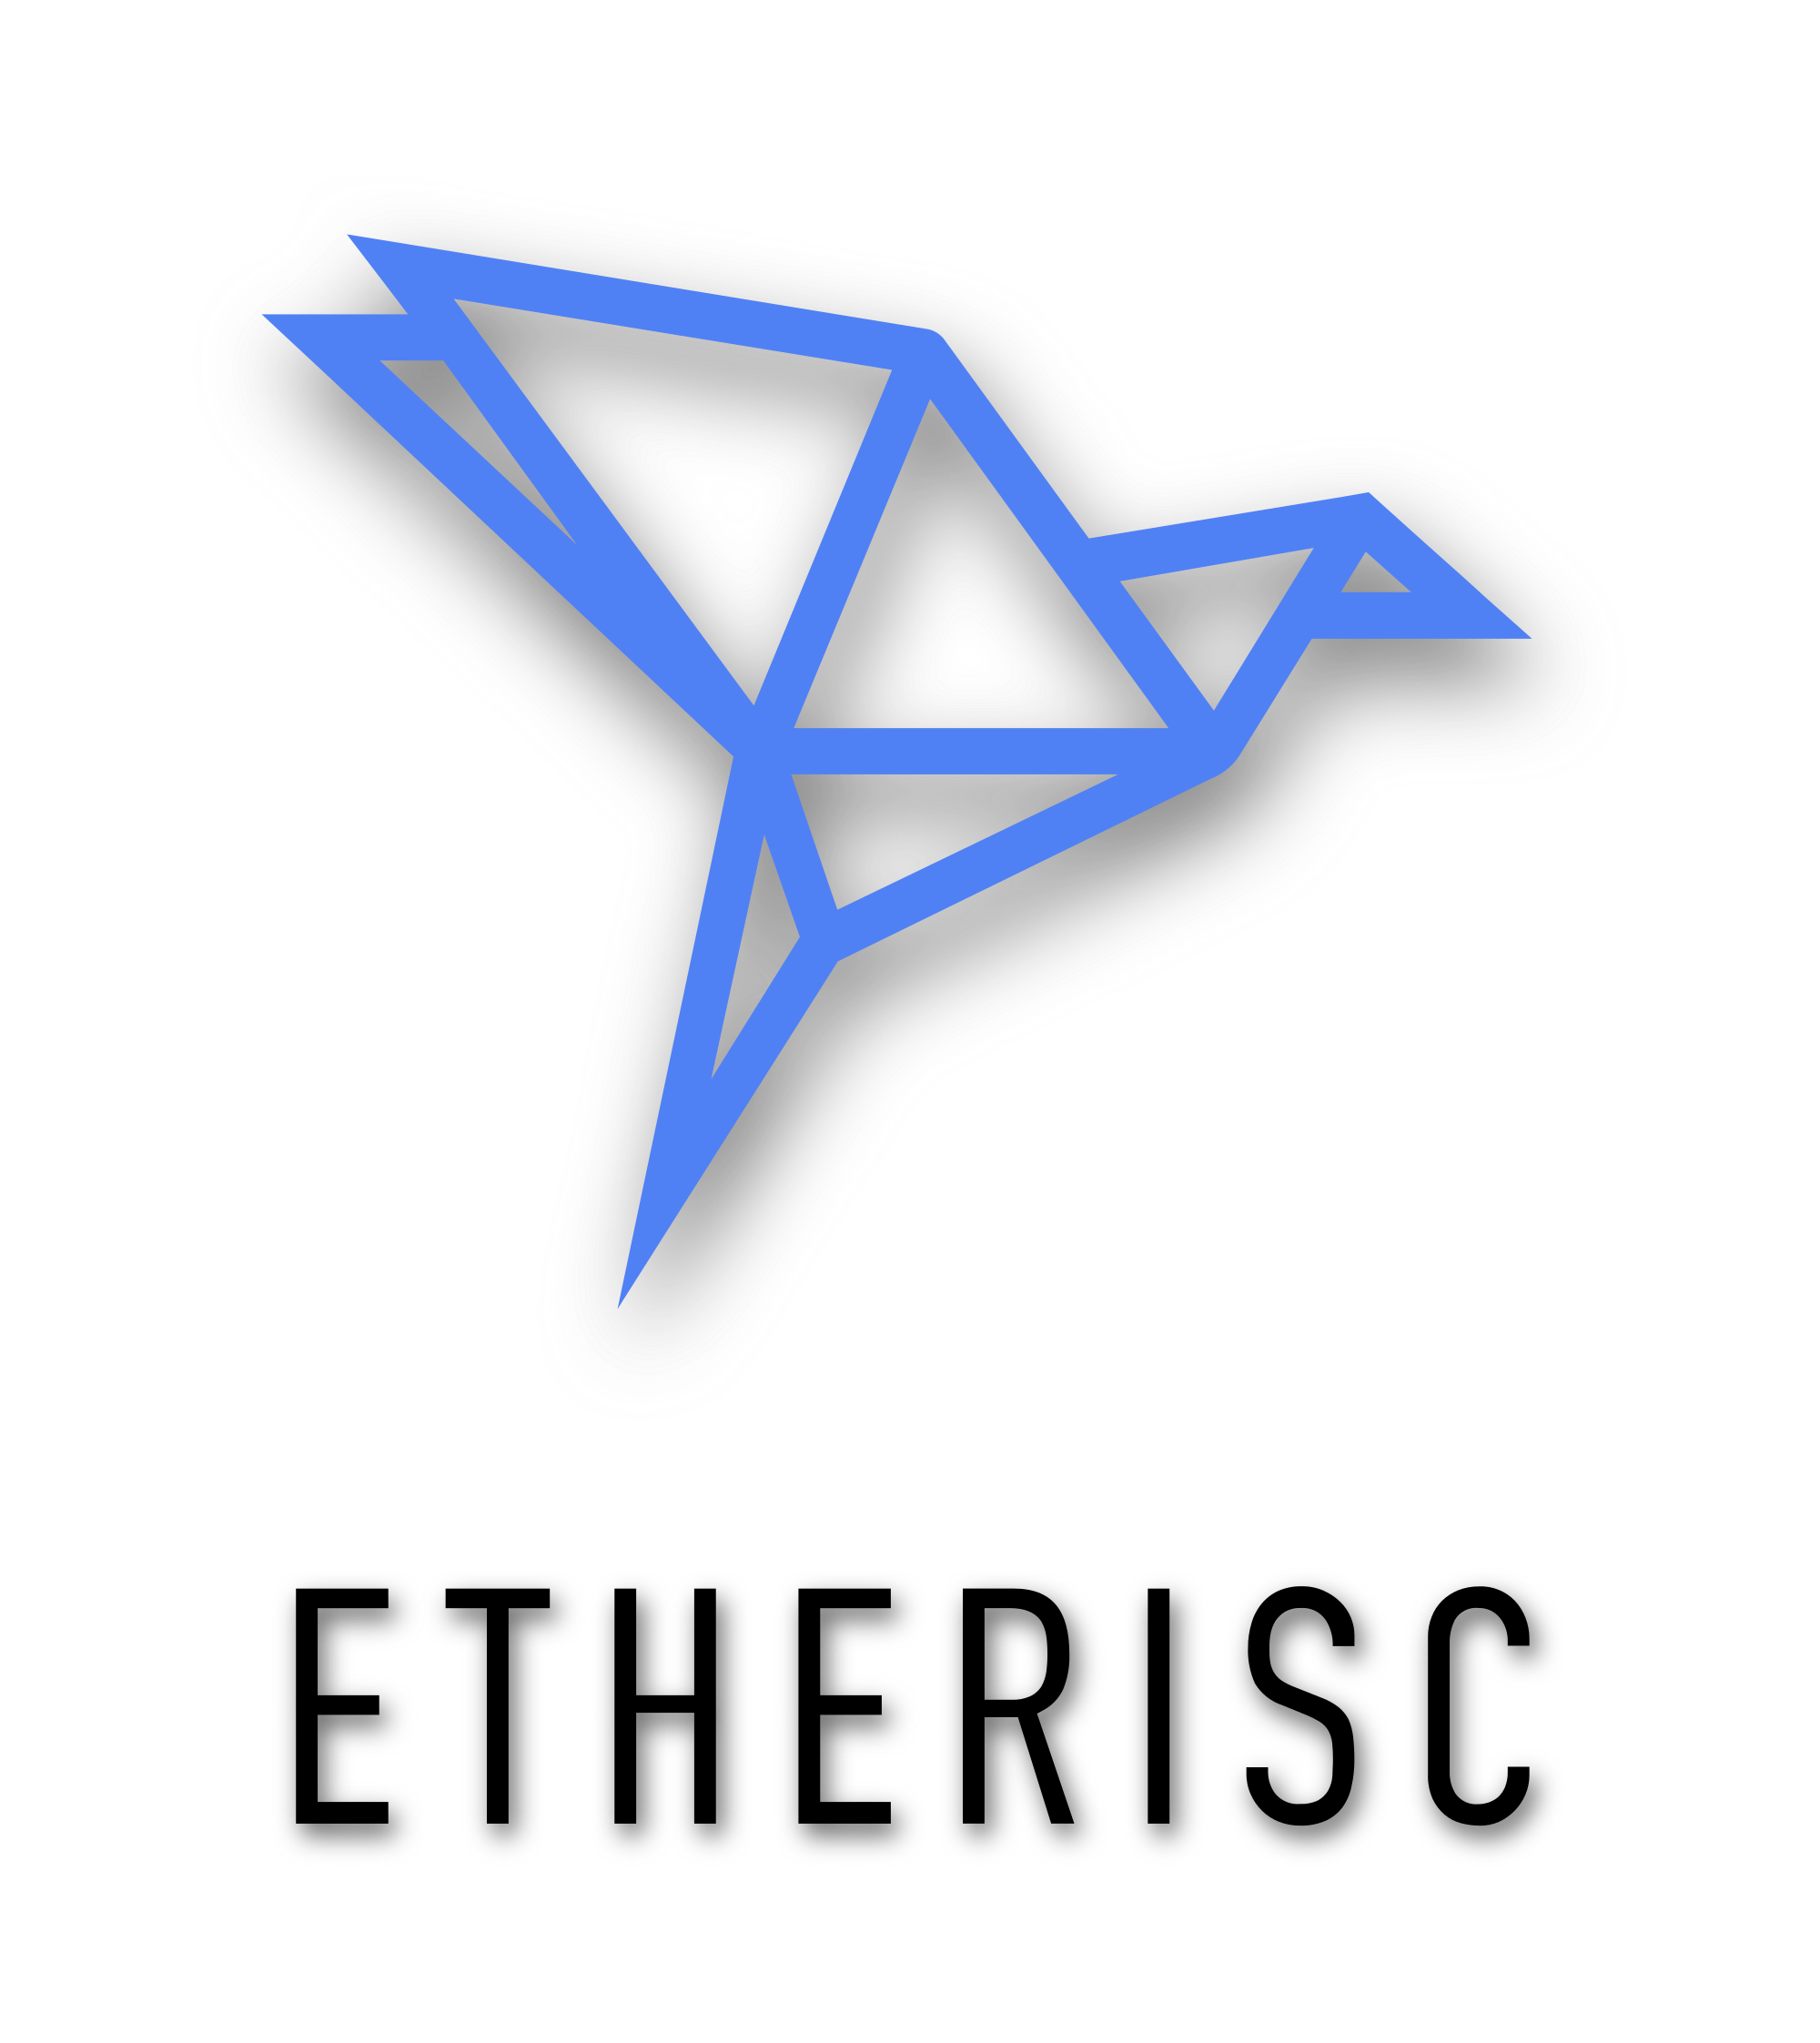 Etherisc